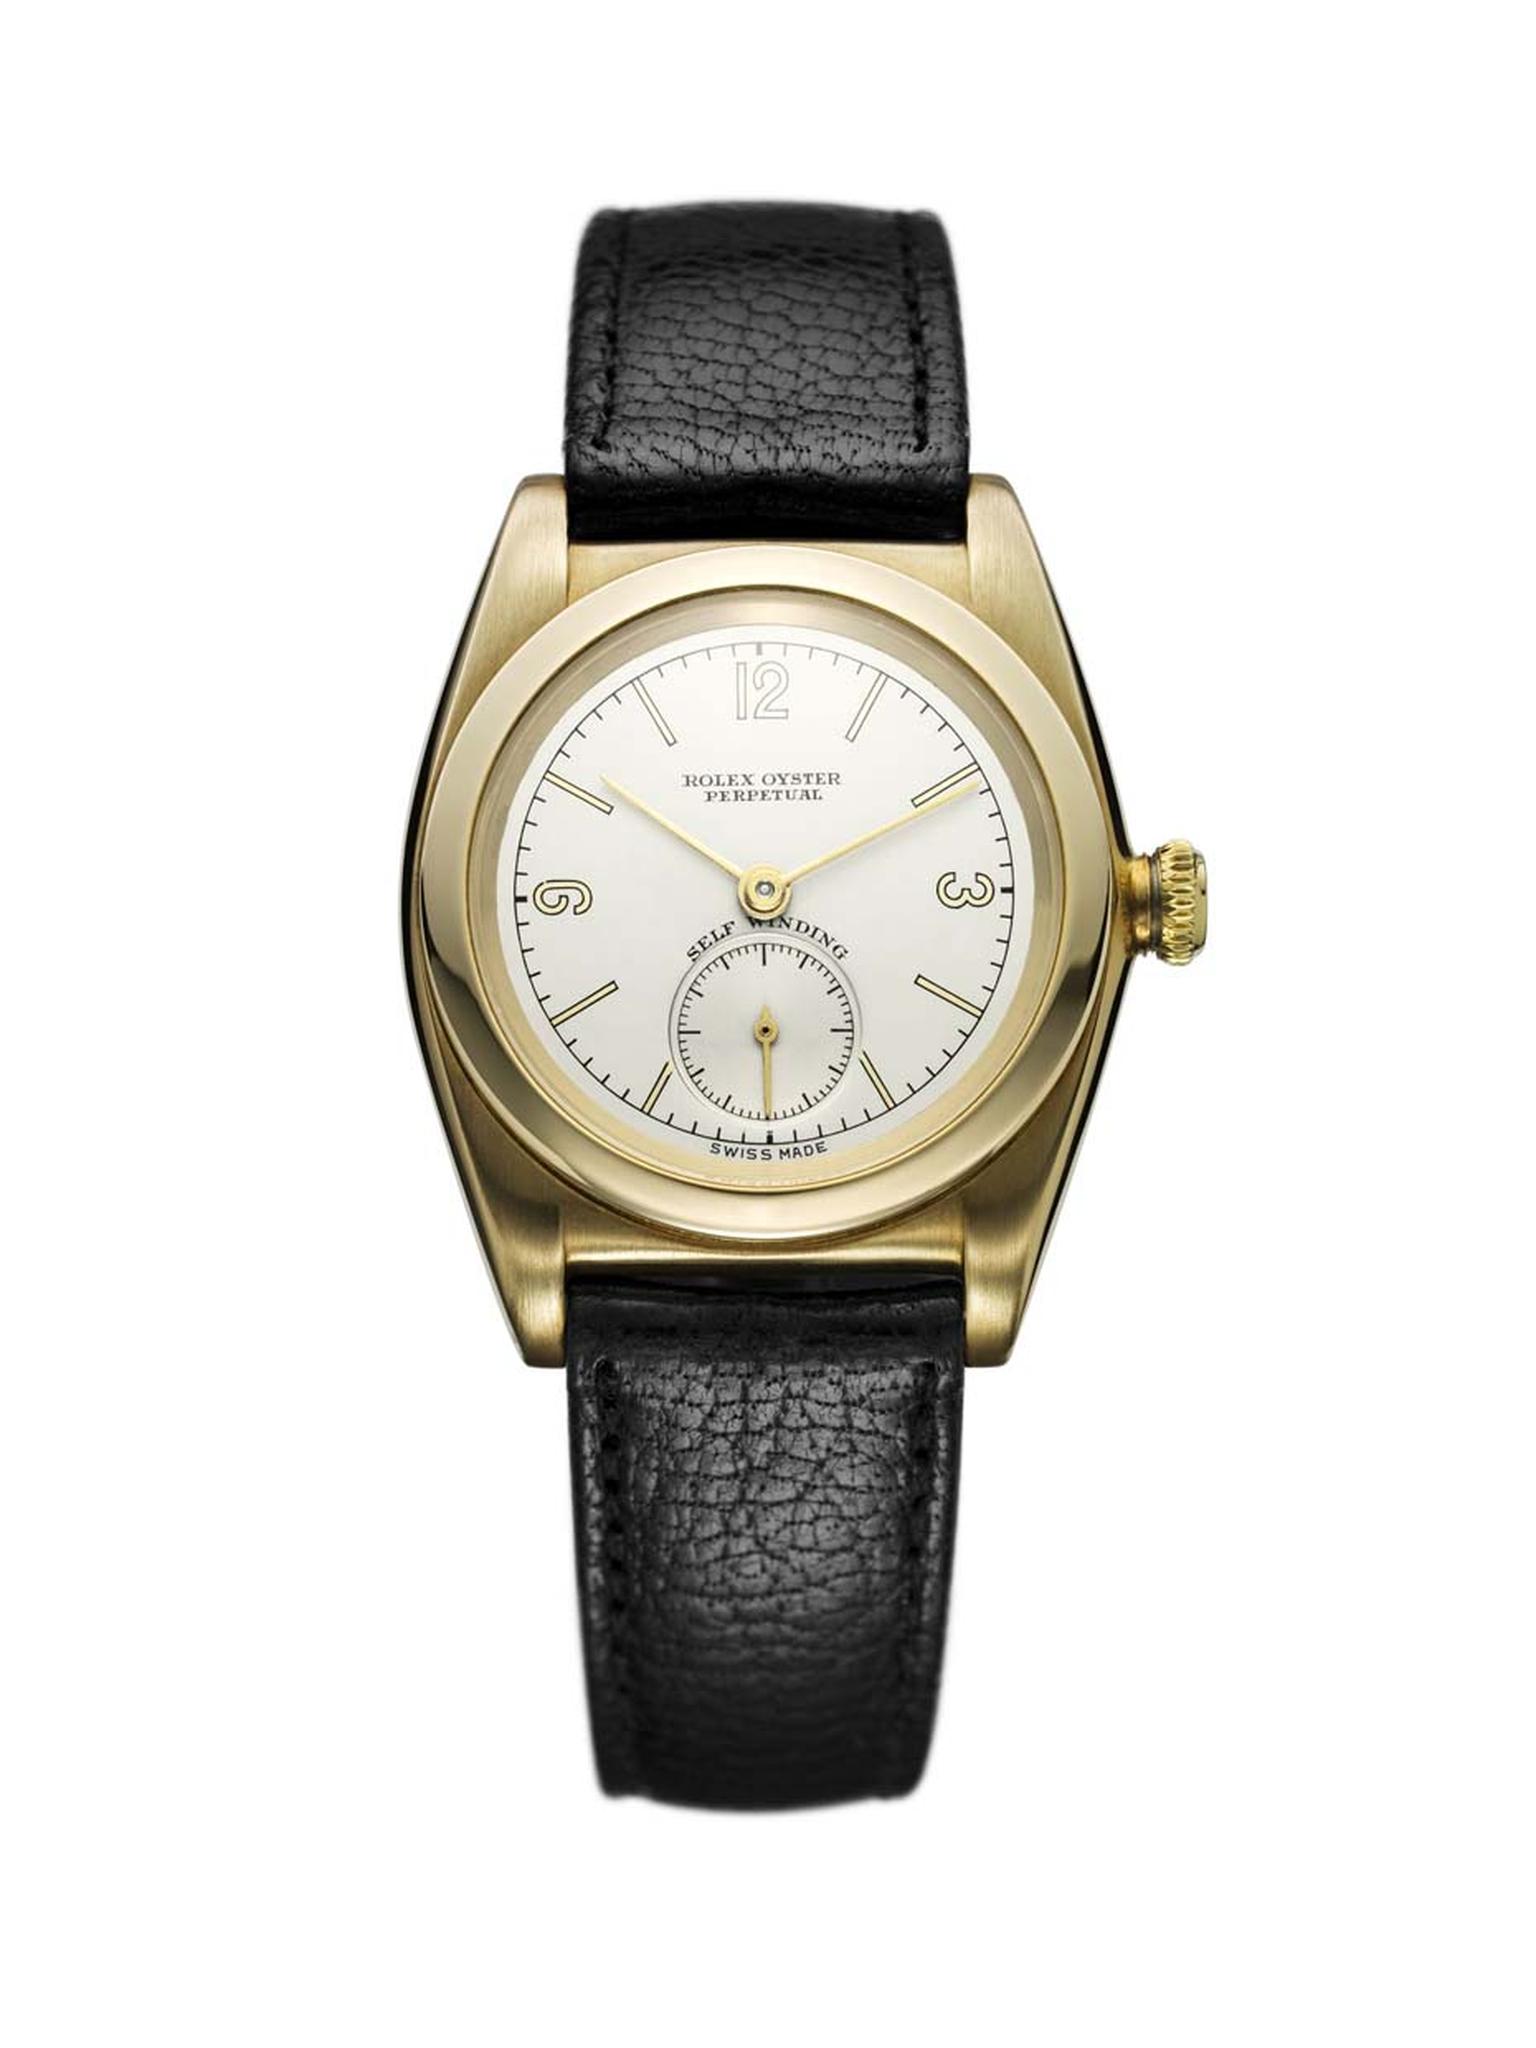 Rolex Oyster Perpetual watch circa 1931 